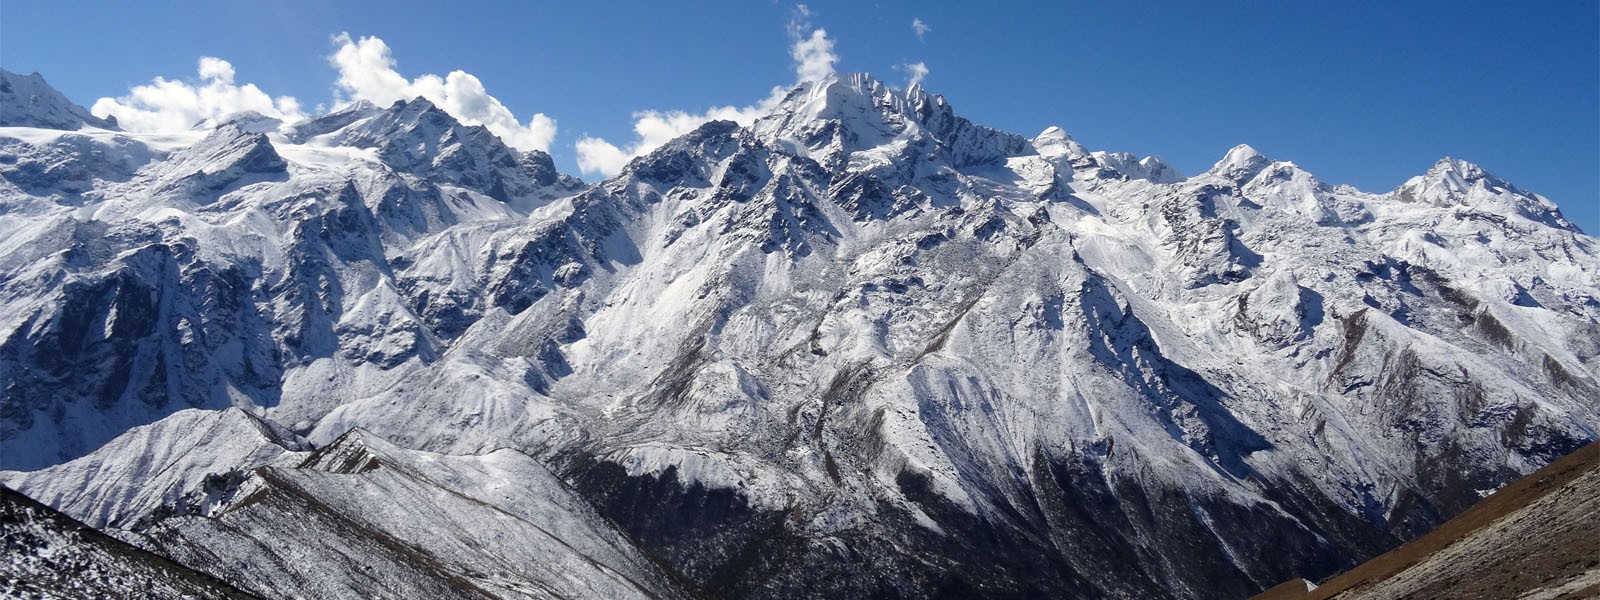 Mt. Dorje Lakpa Expedition